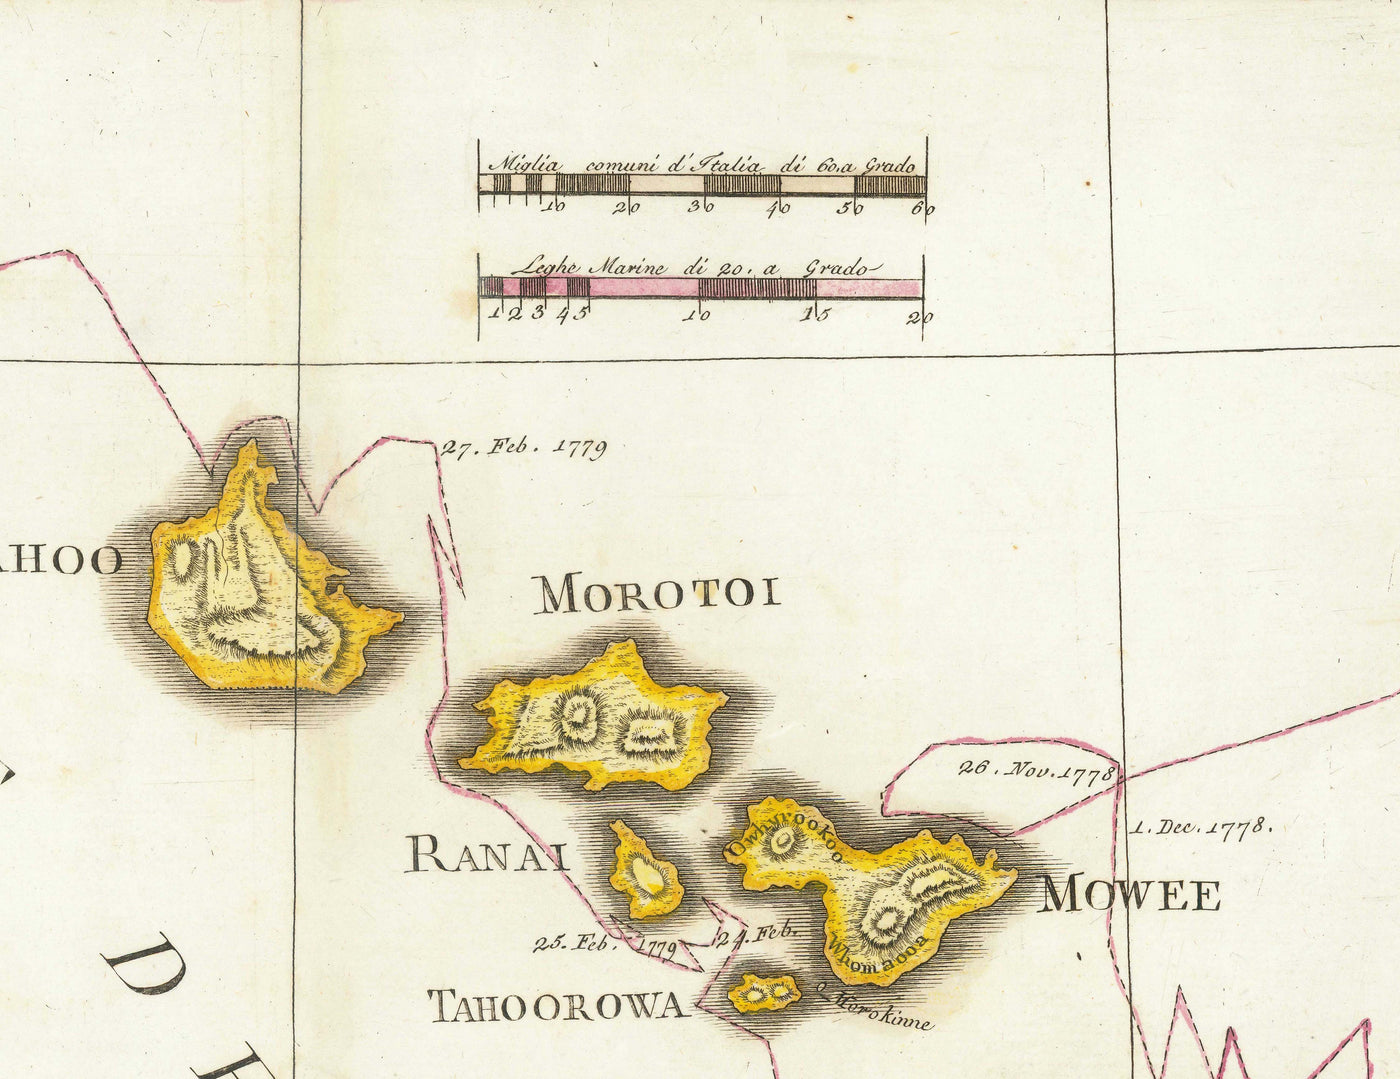 Antiguo mapa de Hawai en 1785 por Giovanni Cassini - Islas Sandwich, Maui, O'ahu, Honolulu, Océano Pacífico